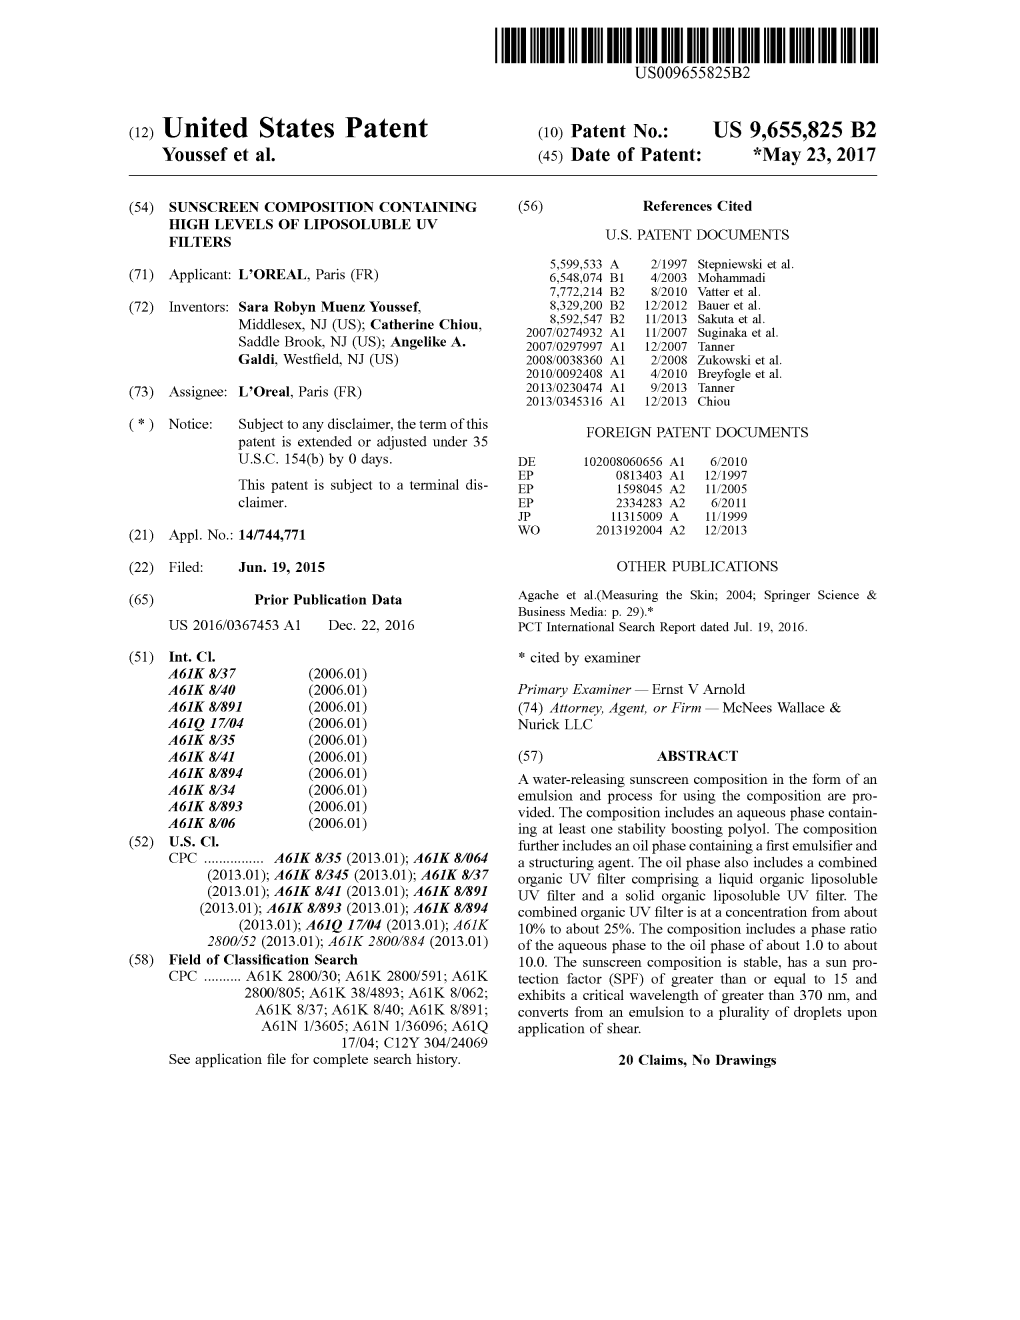 (12) United States Patent (10) Patent No.: US 9,655,825 B2 Youssef Et Al